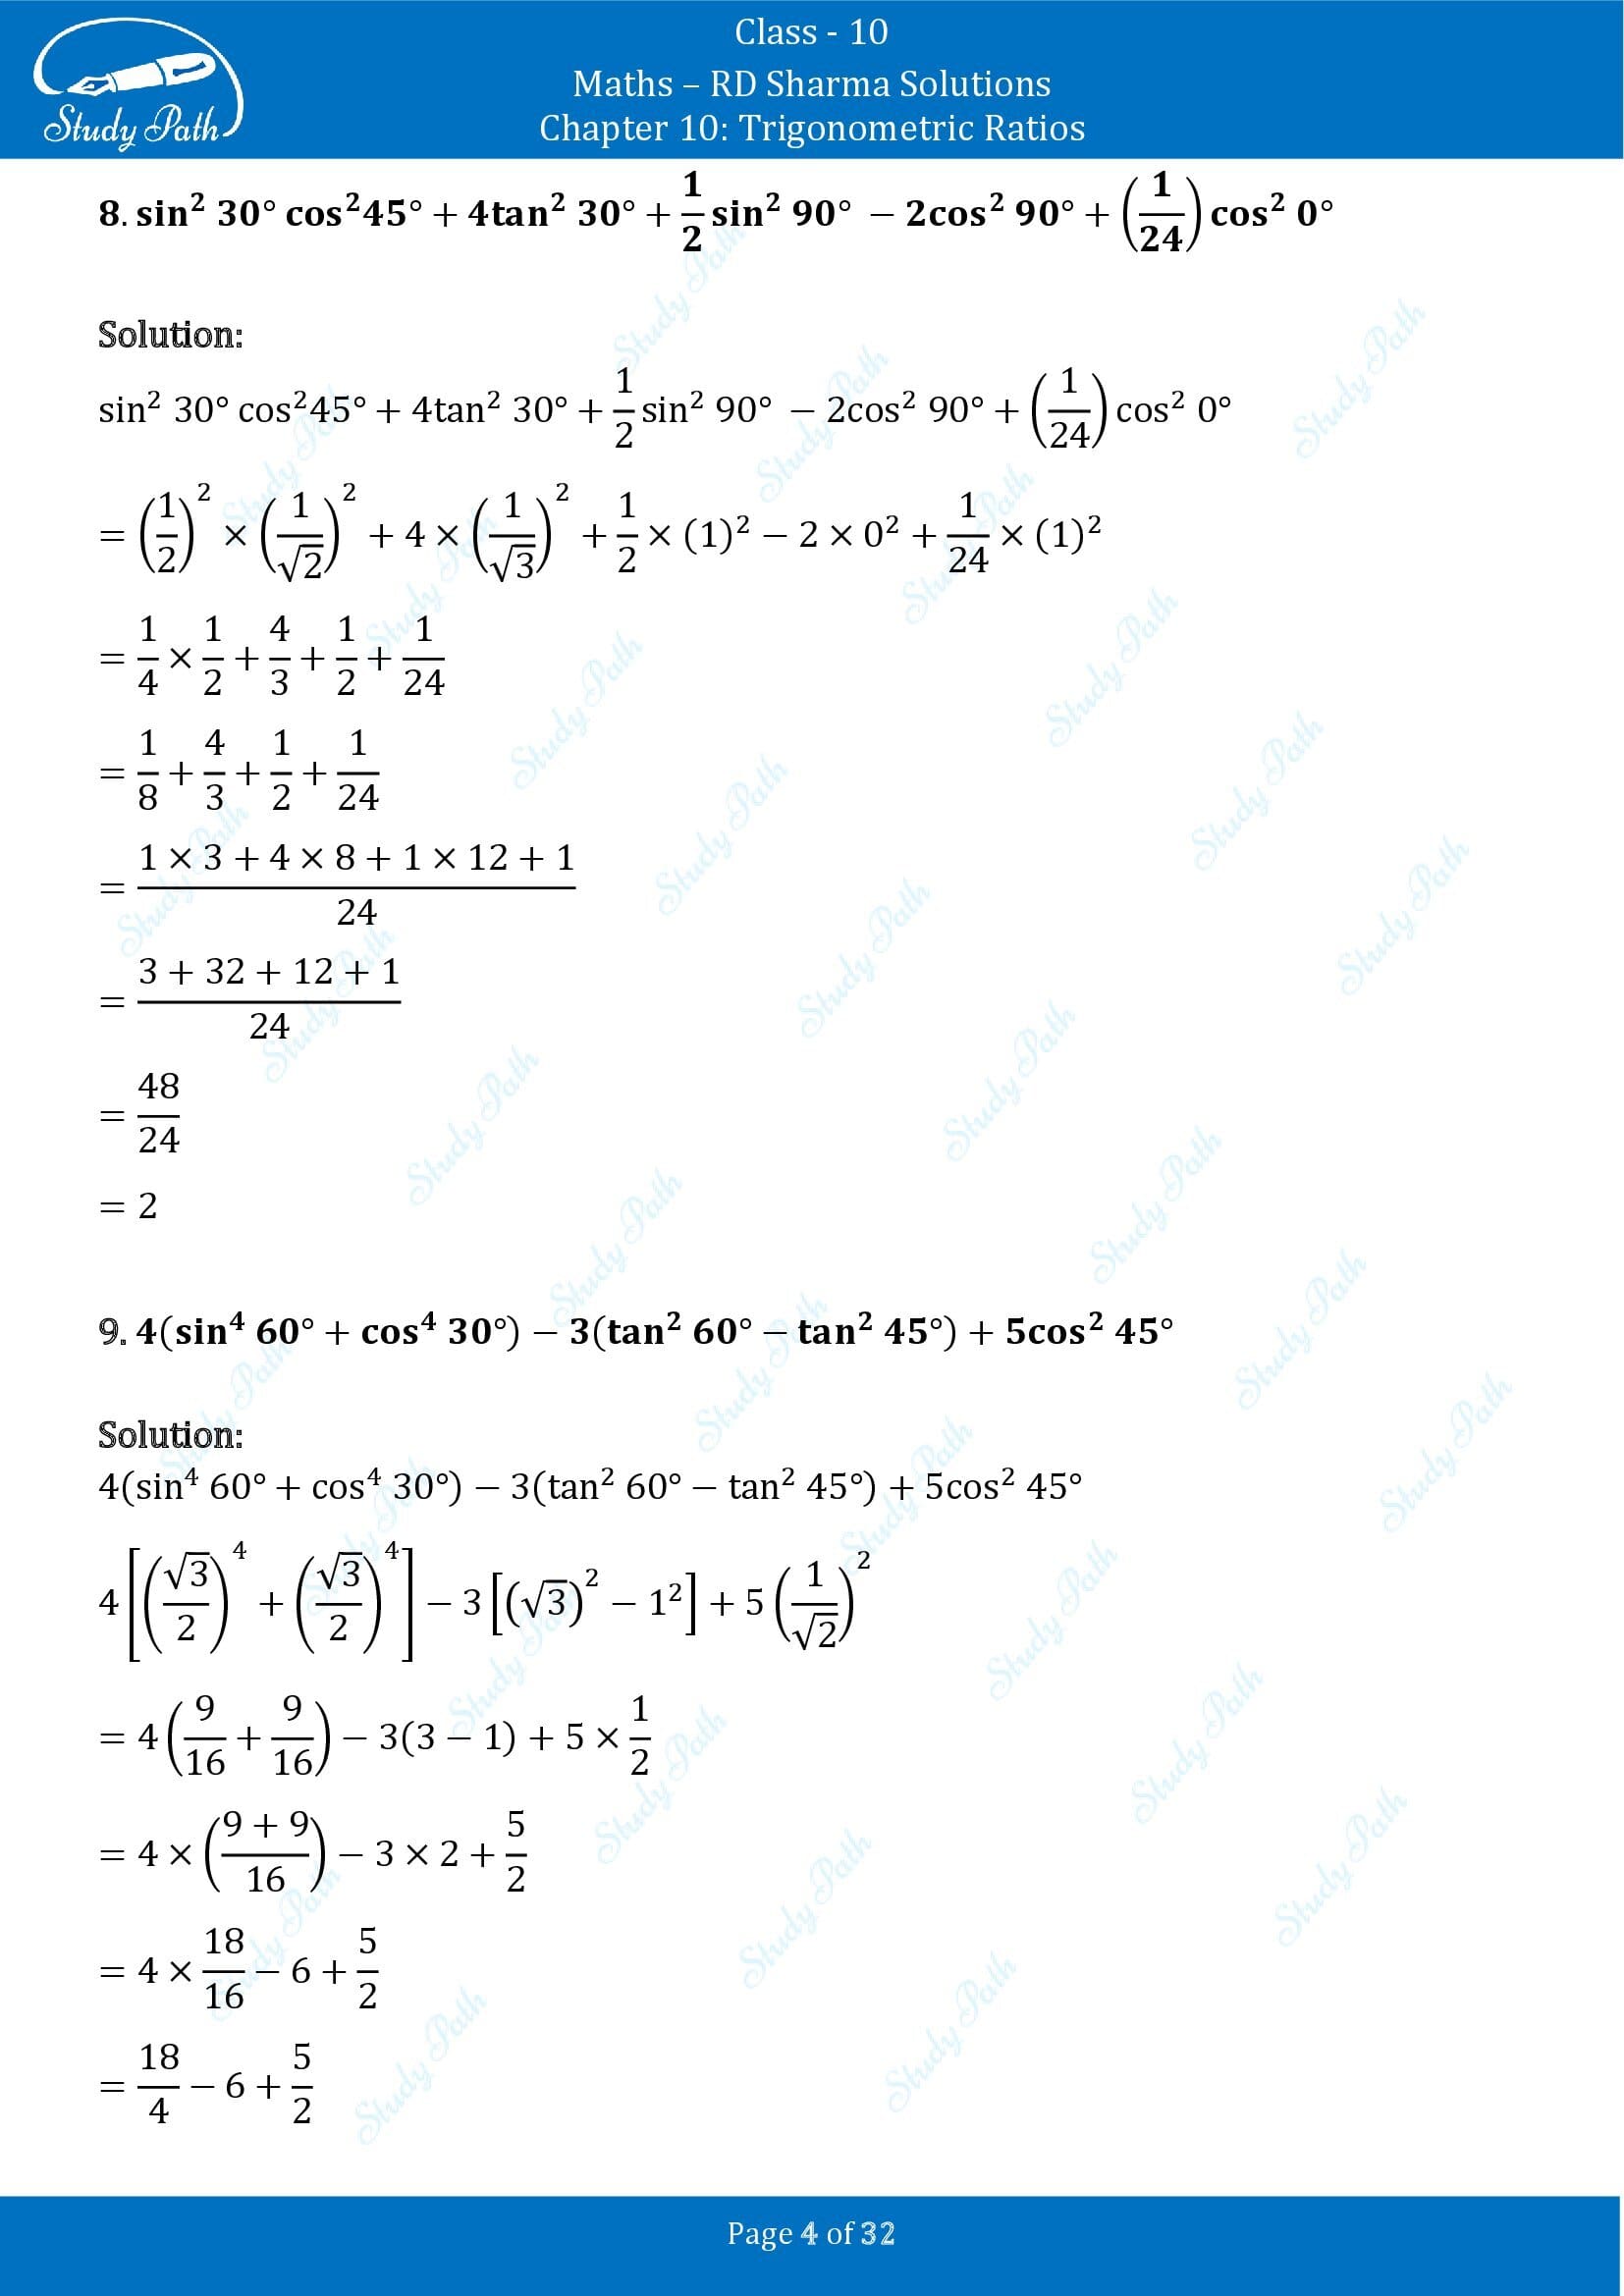 RD Sharma Solutions Class 10 Chapter 10 Trigonometric Ratios Exercise 10.2 00004